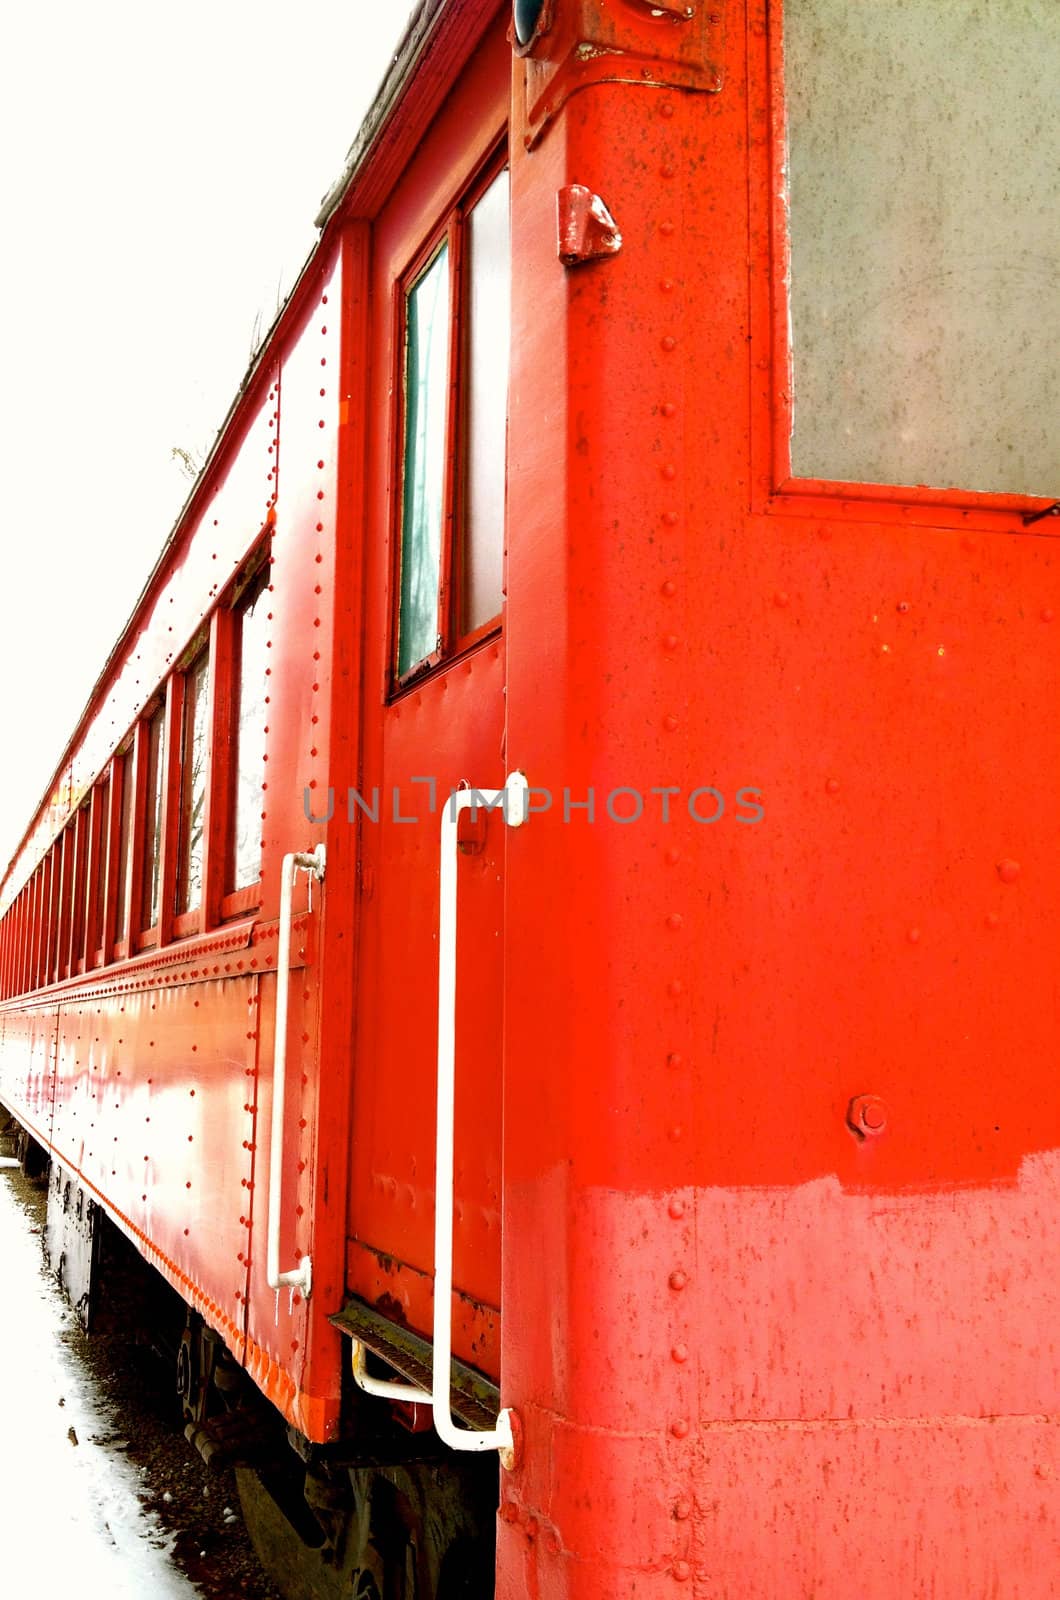 Lebanon Ohio Red Train Car
